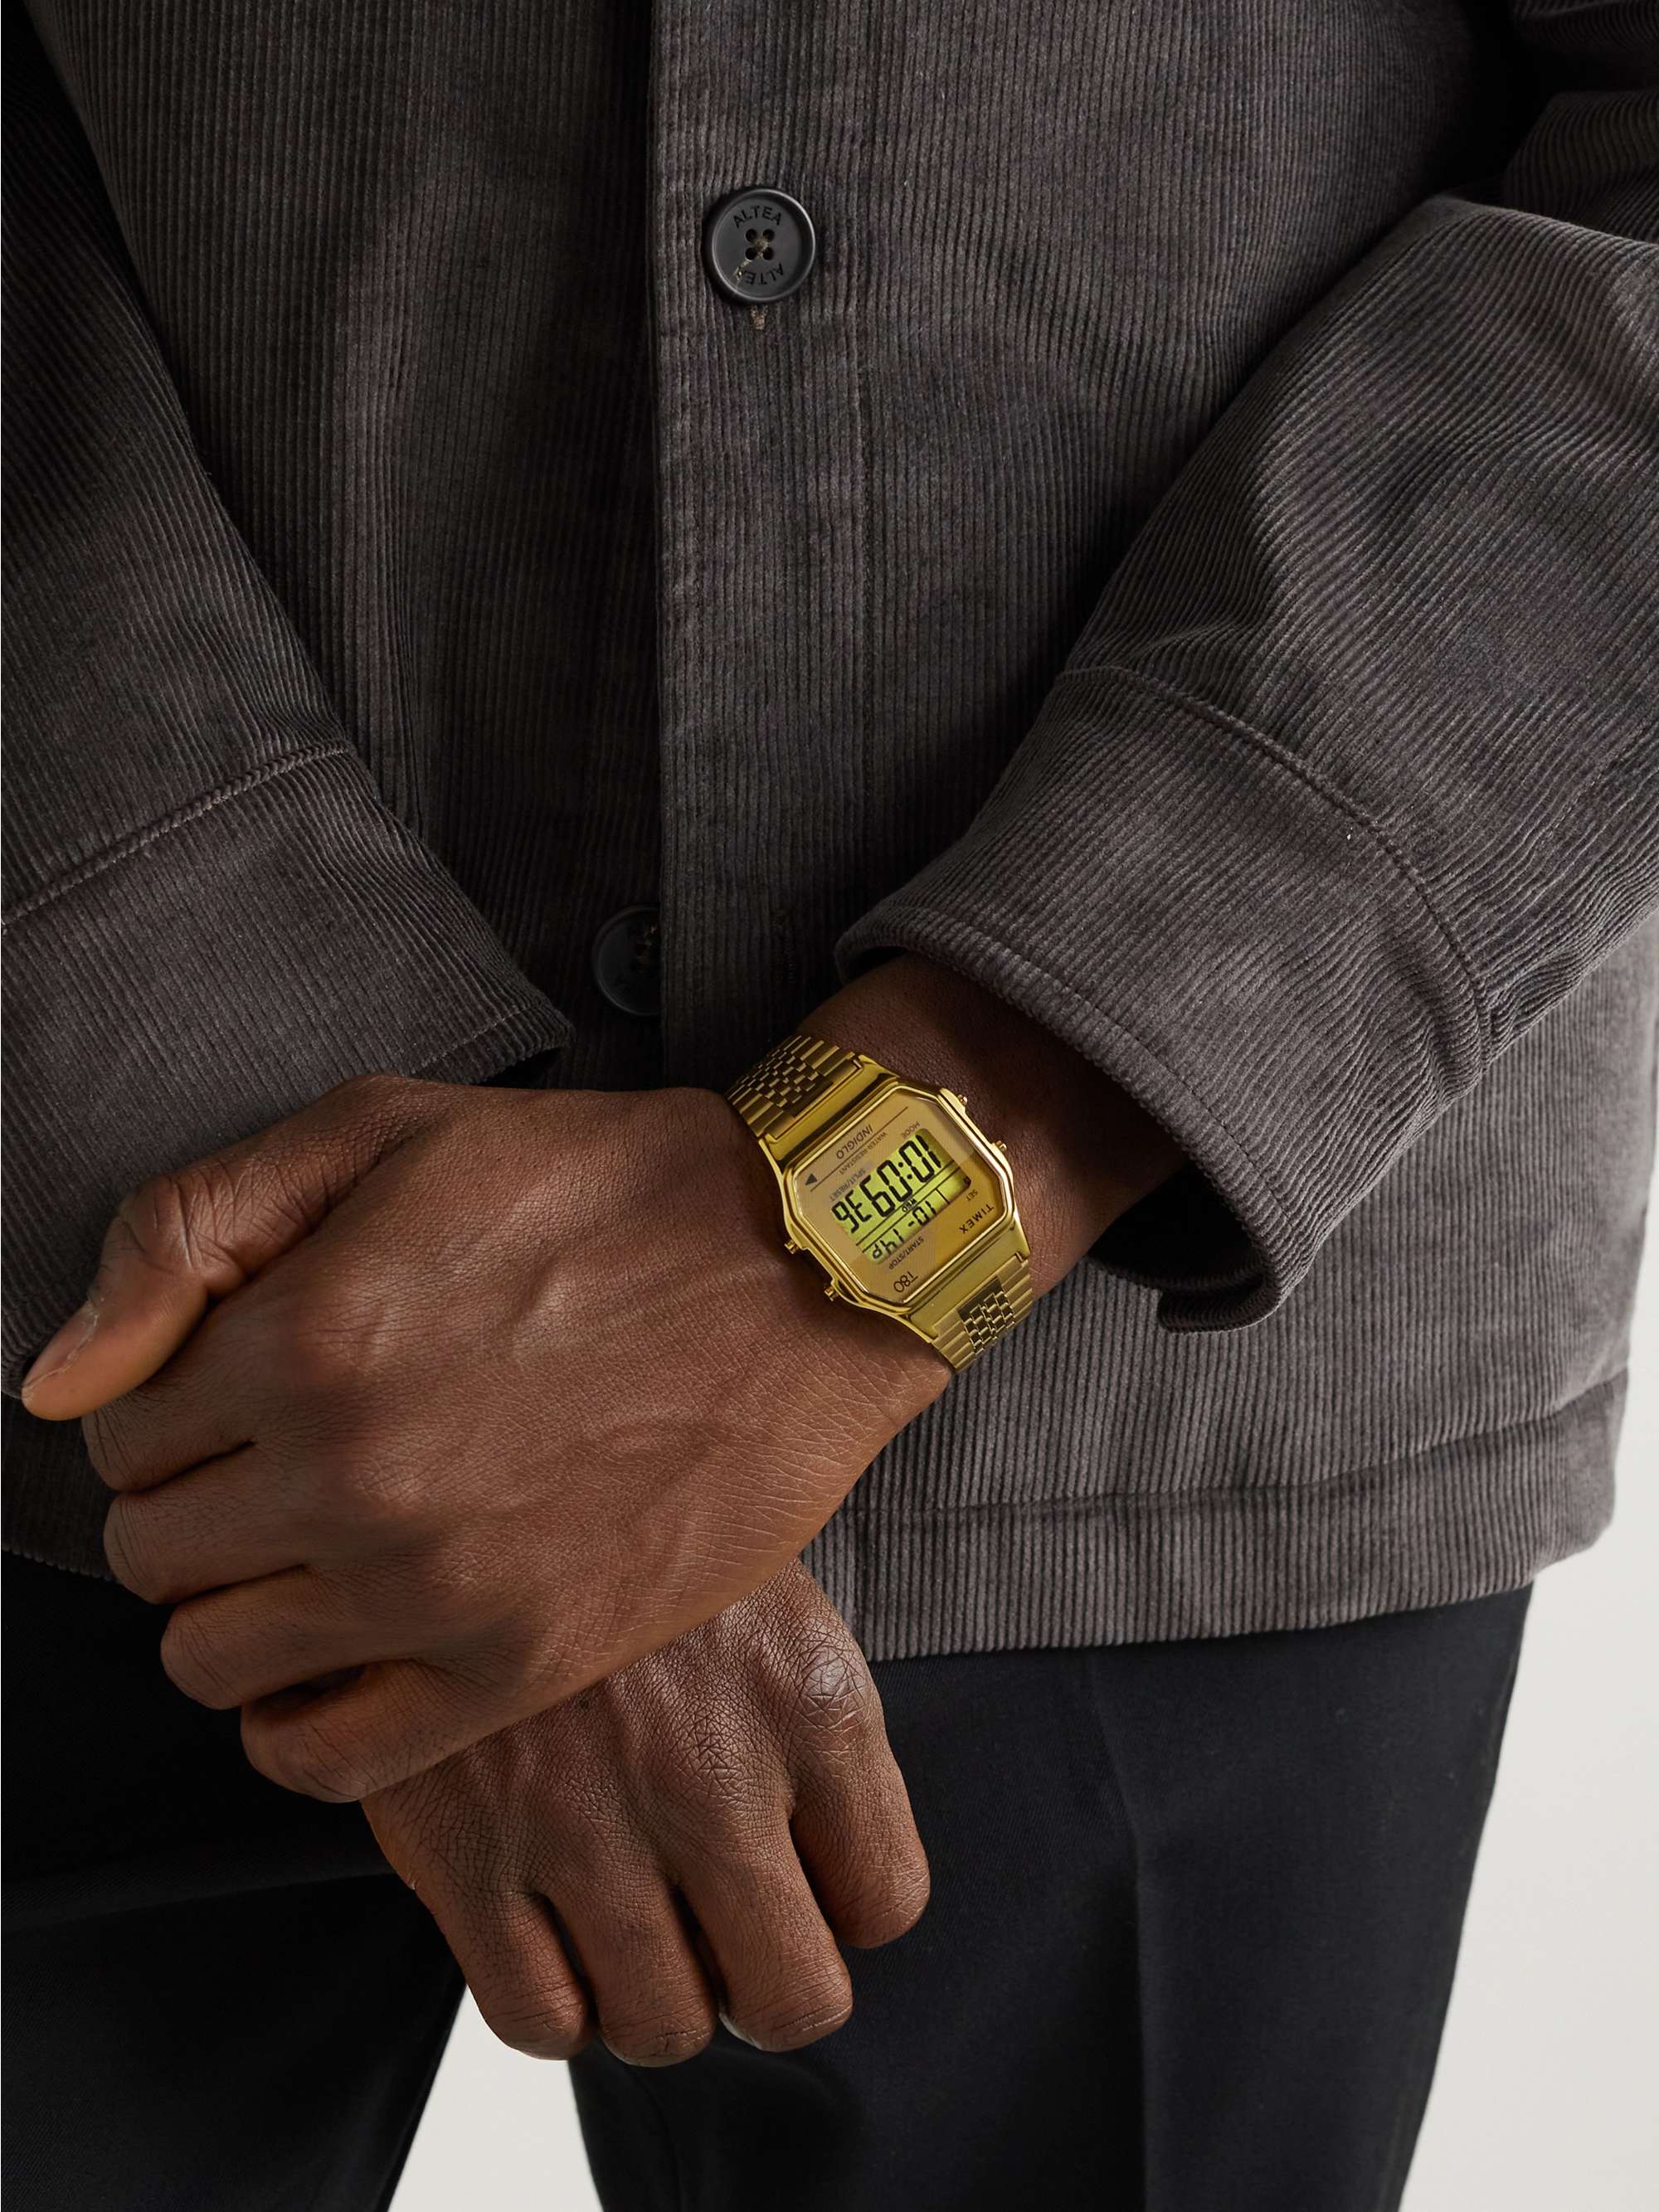 TIMEX T80 34mm Gold-Tone Digital Watch